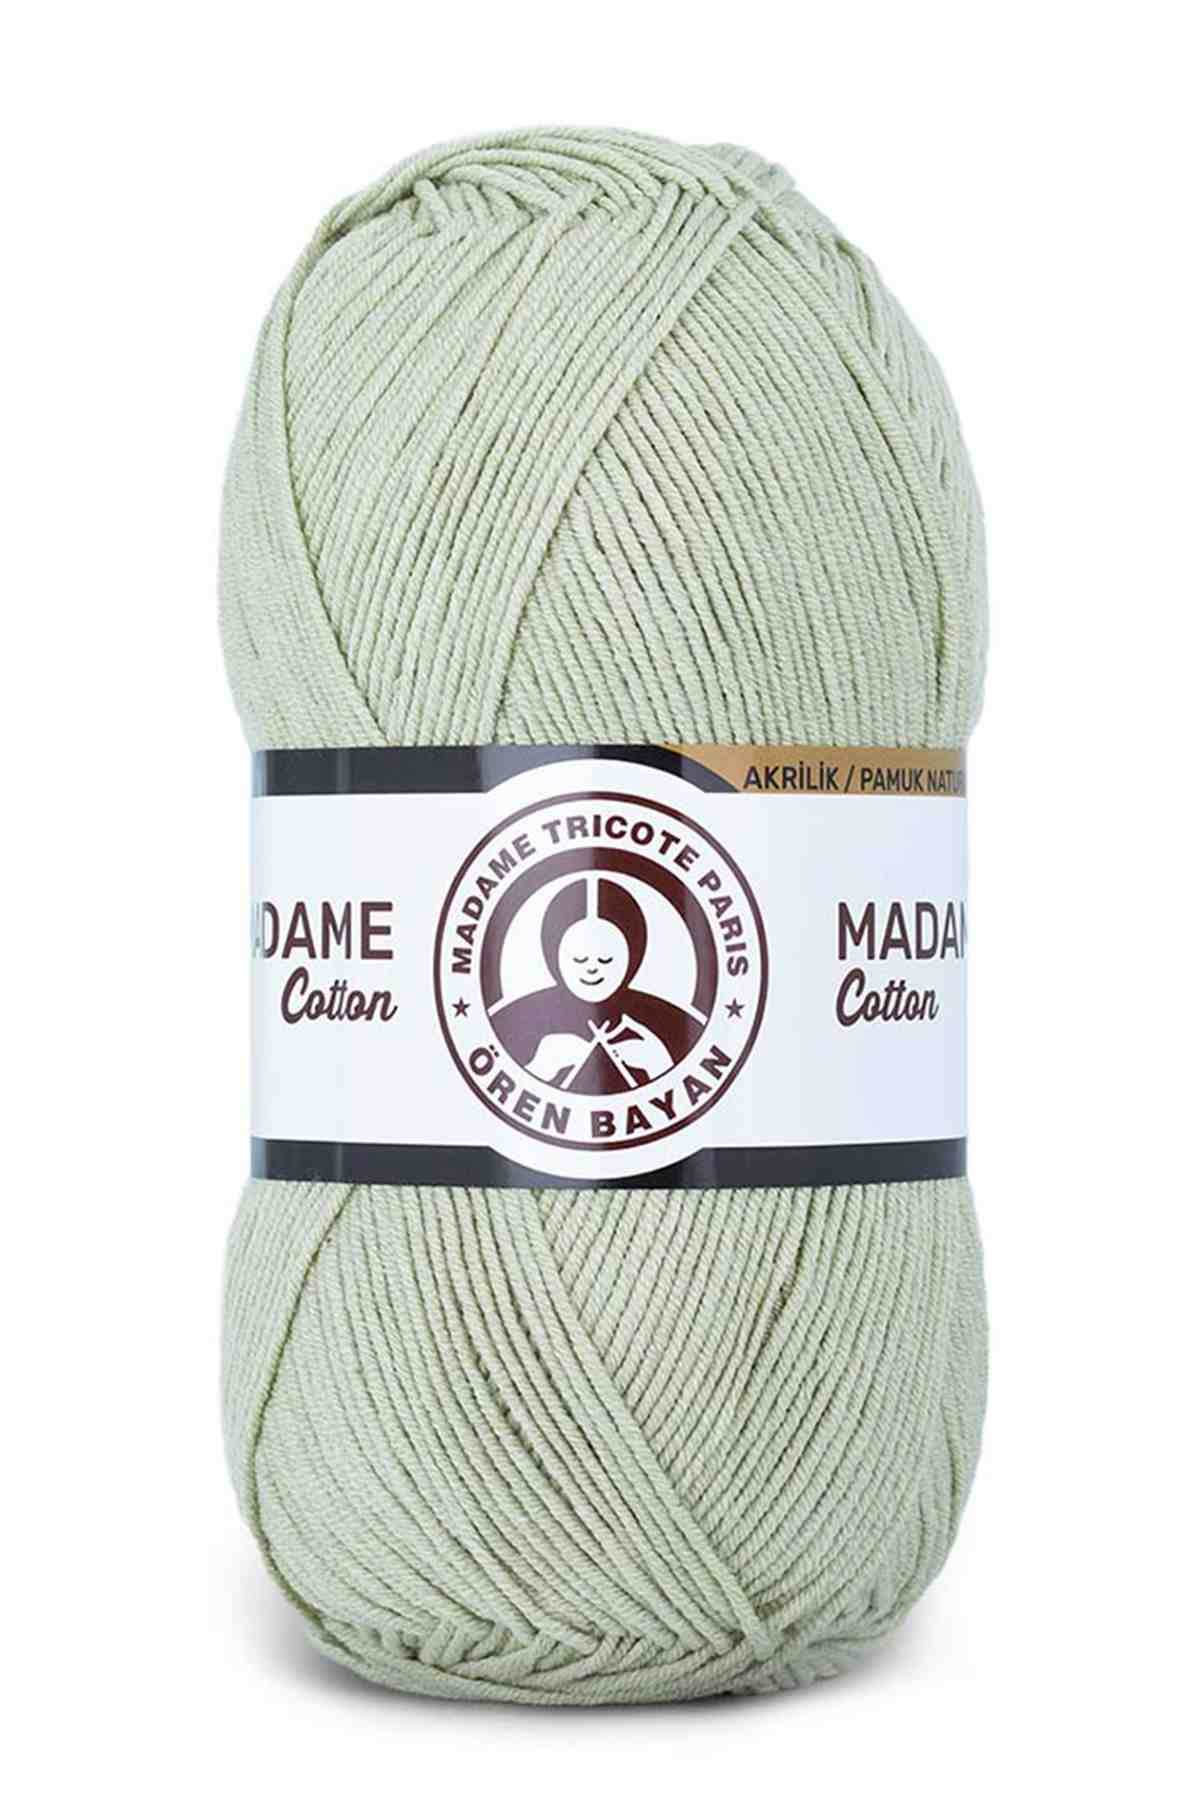 Madame Tricote Paris Madame Cotton Cotton Yarn